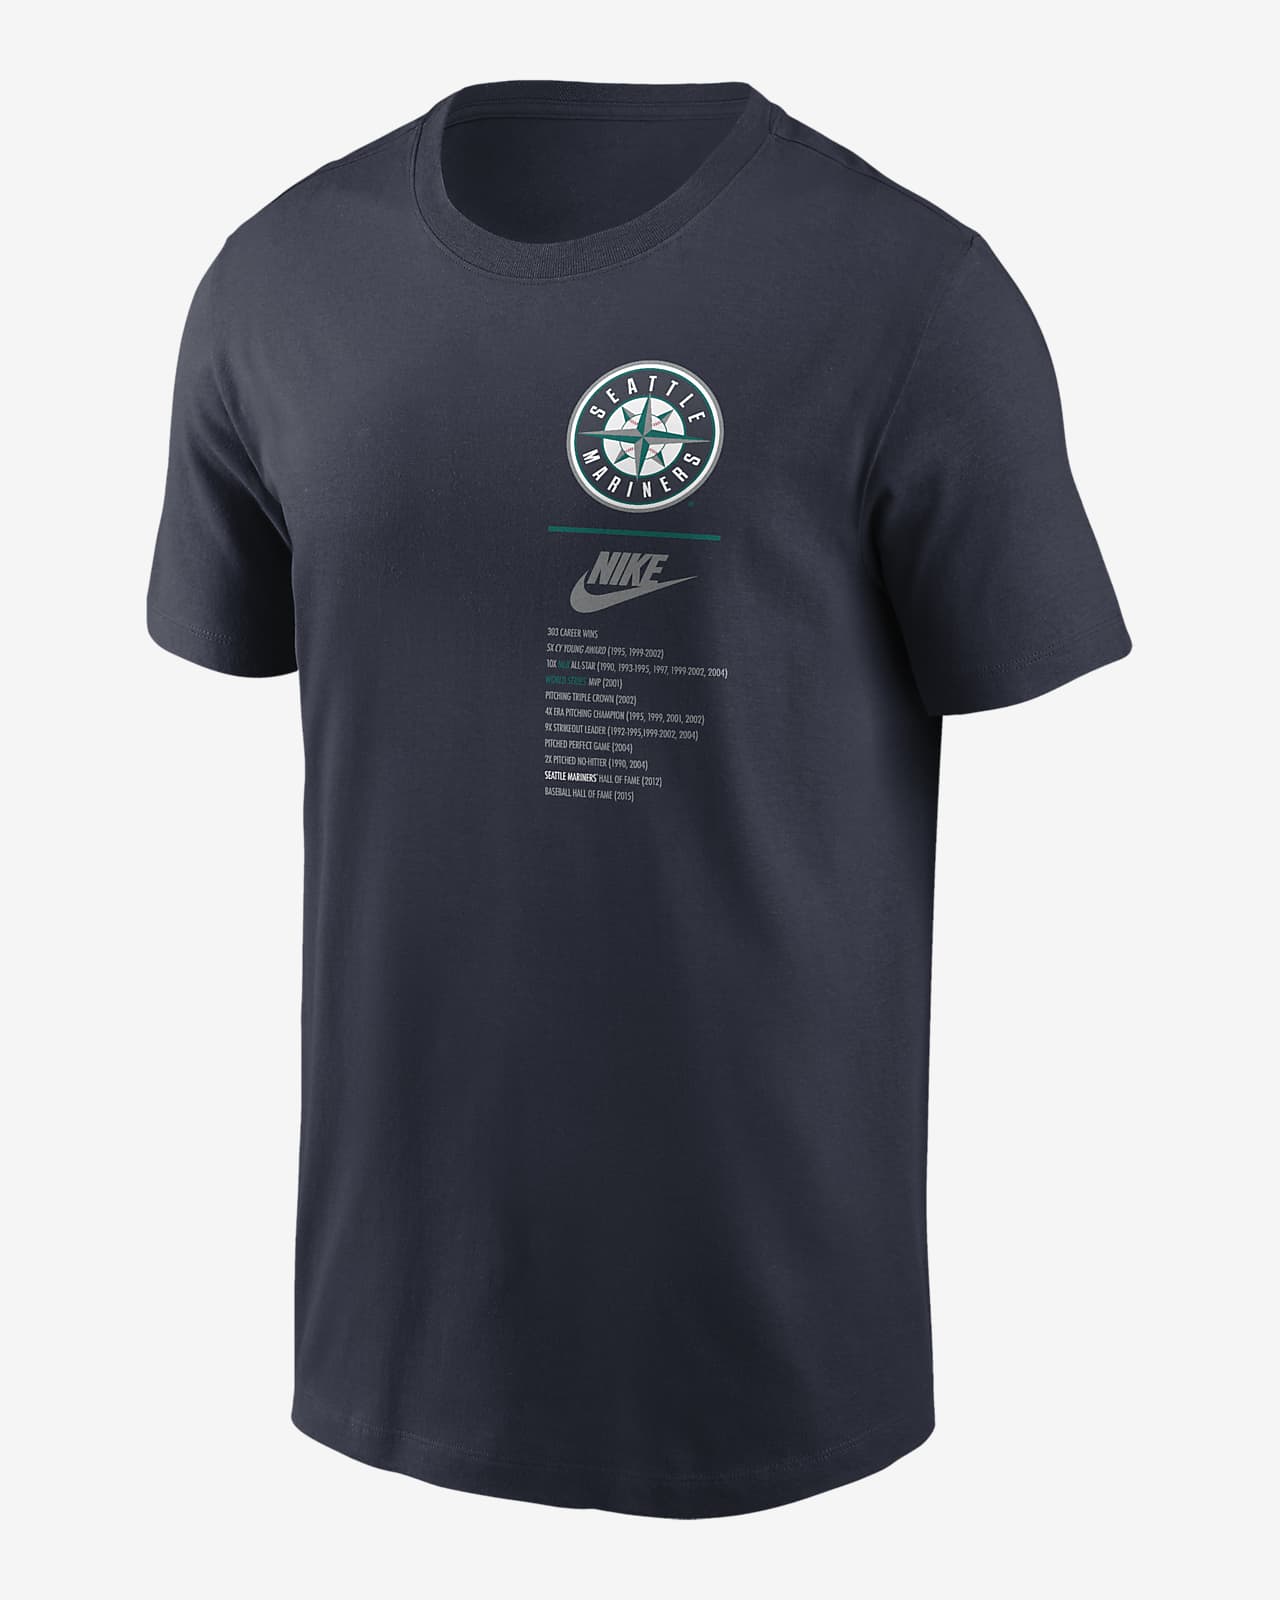 Randy Johnson In Seattle Mariners T-shirt